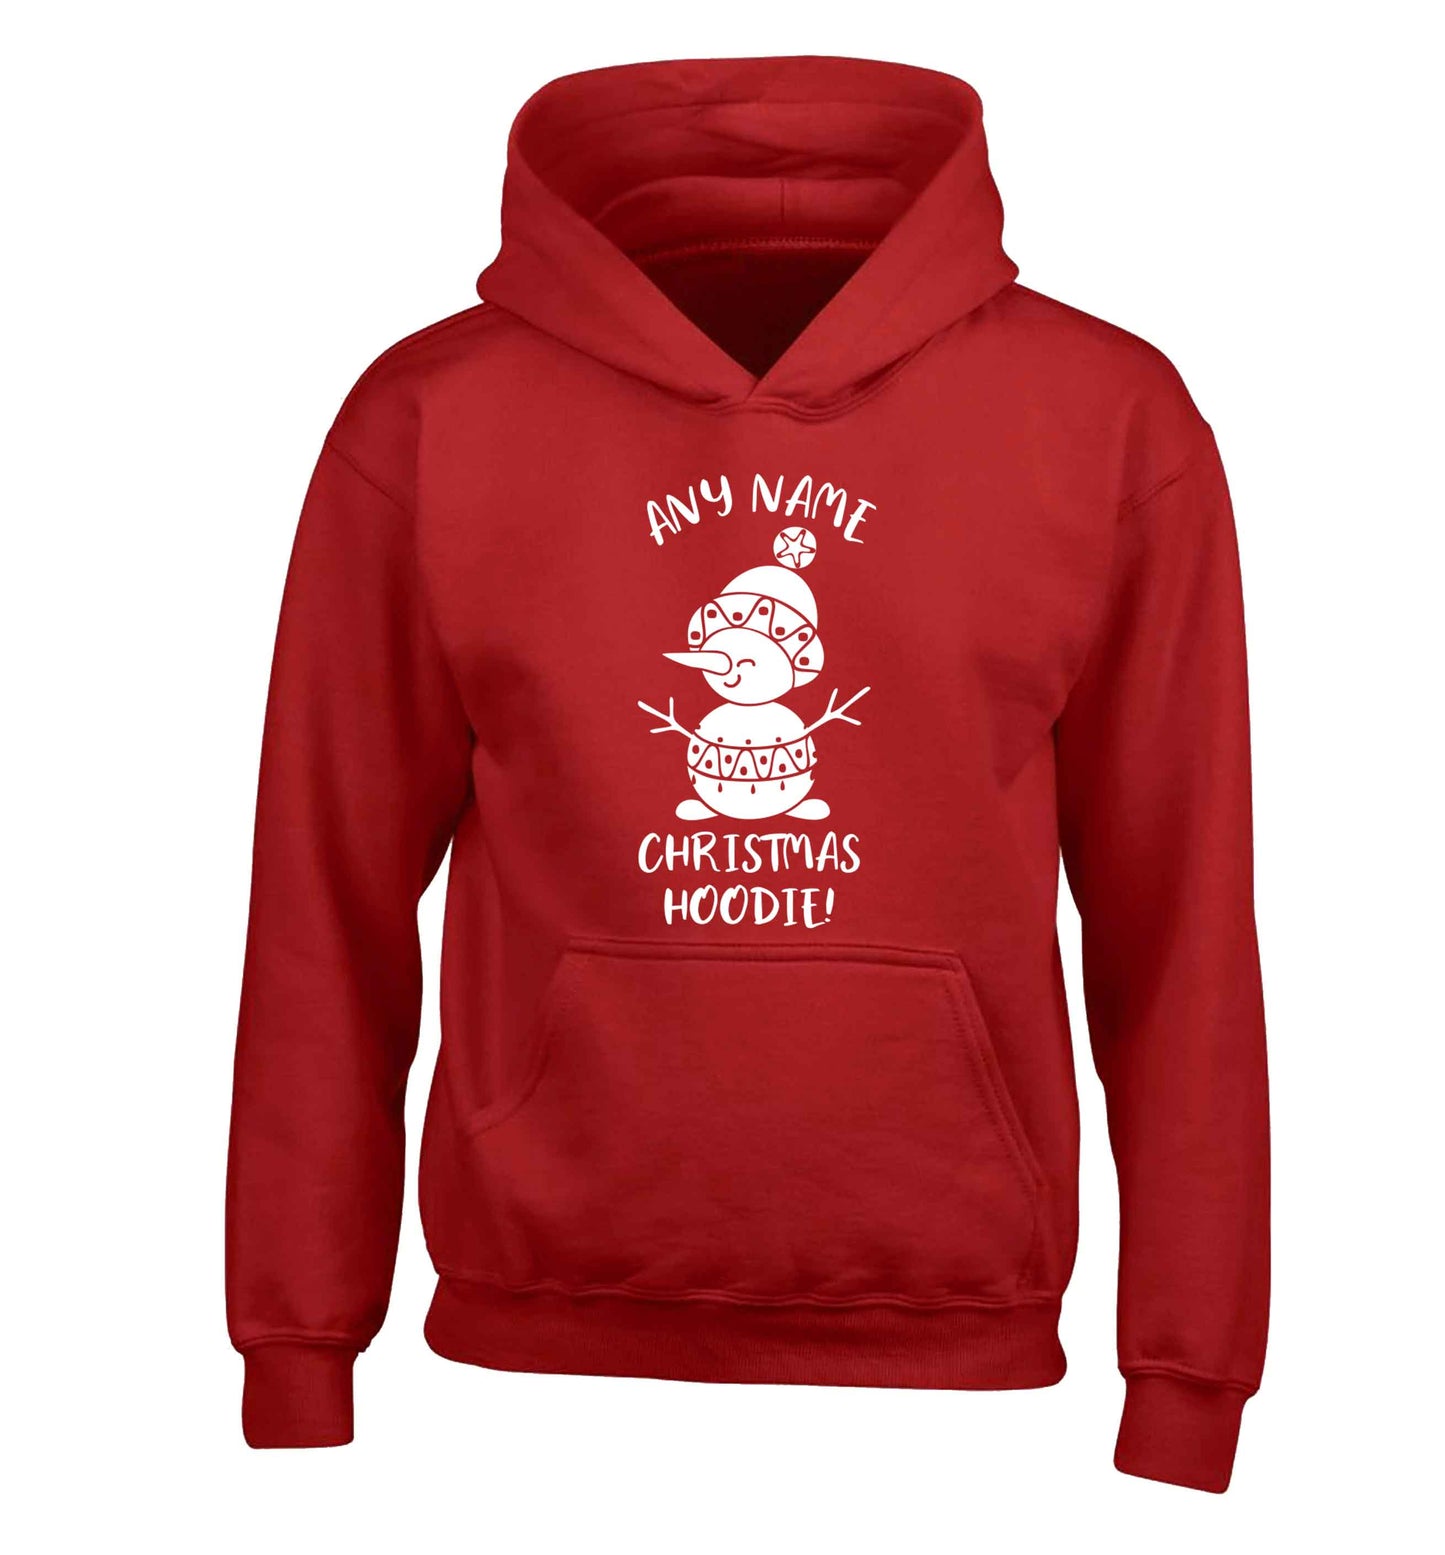 Personalised Christmas hoodie any name children's red hoodie 12-13 Years